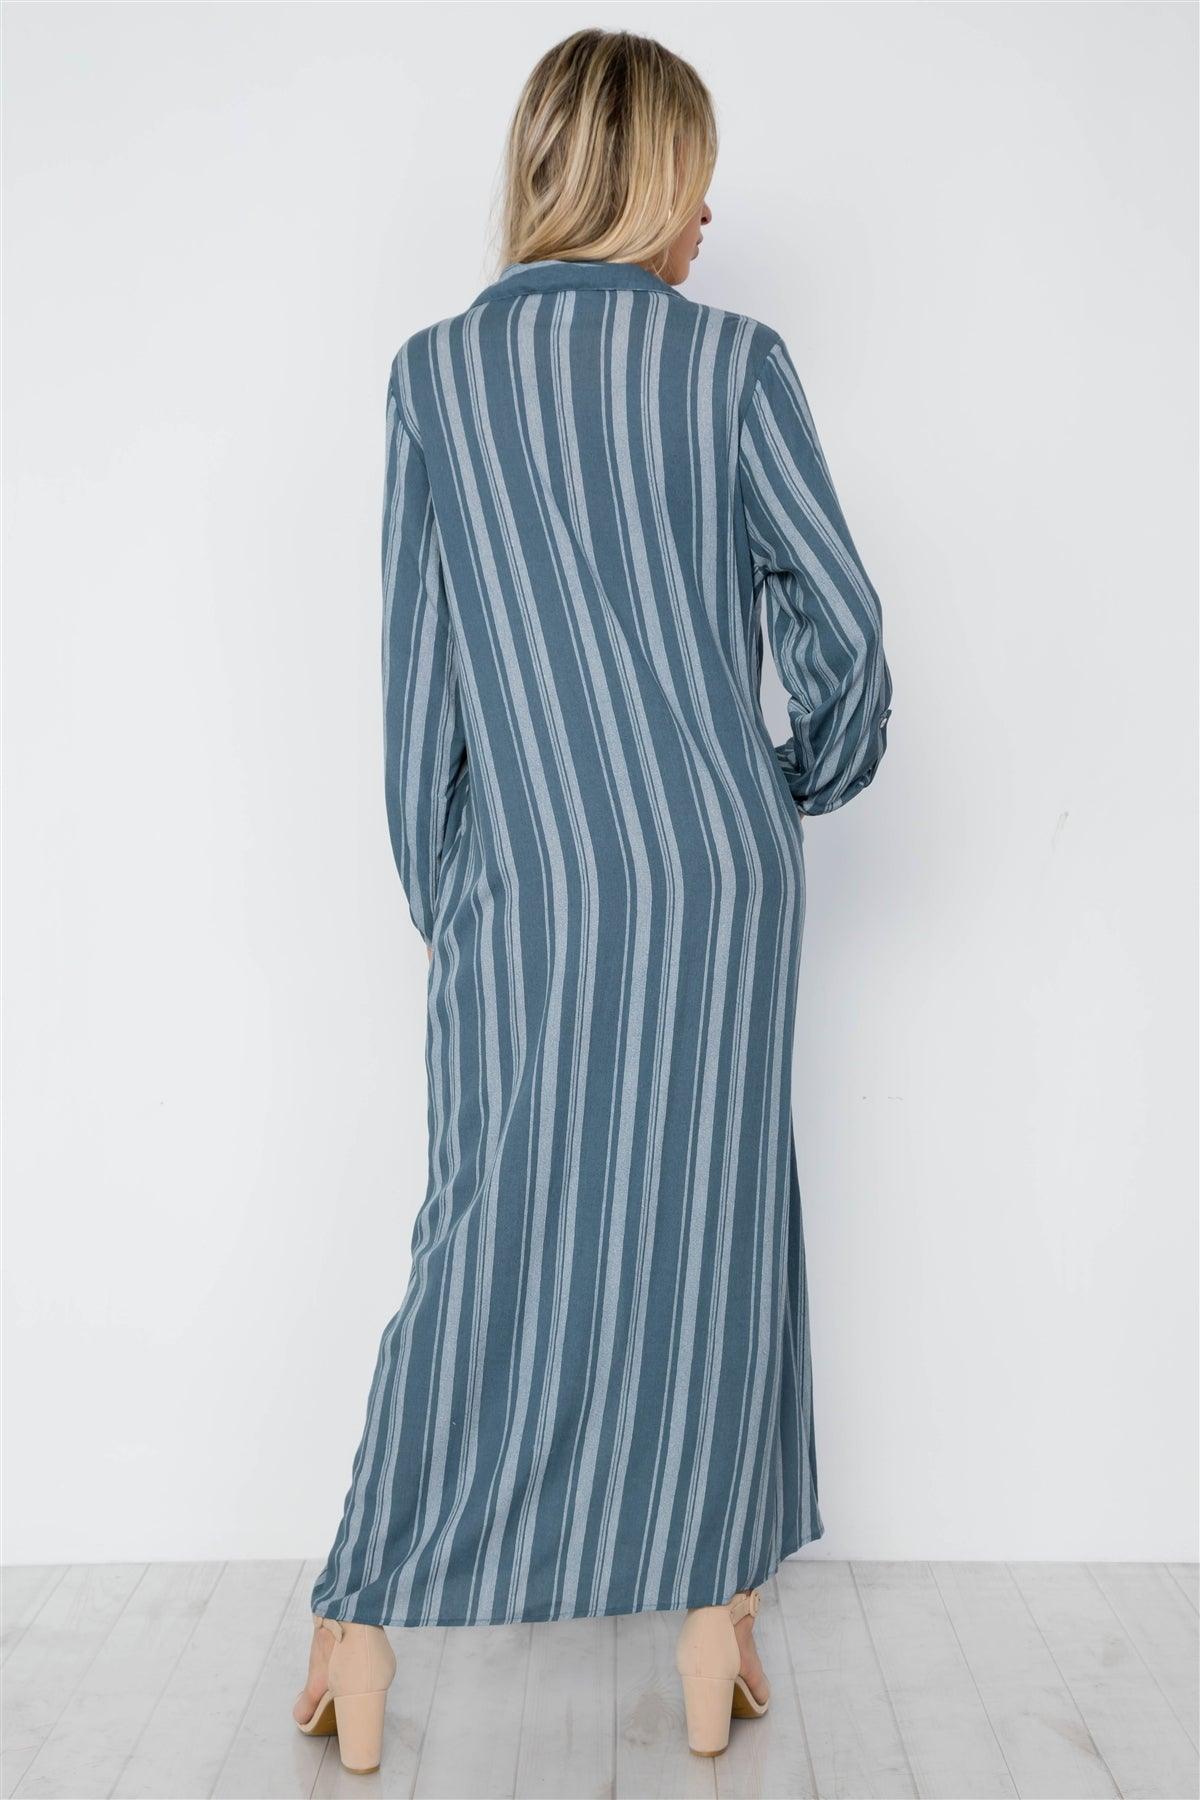 Dusty Blue Stripe Long Sleeve Button Down Shirt Dress / 2-2-2